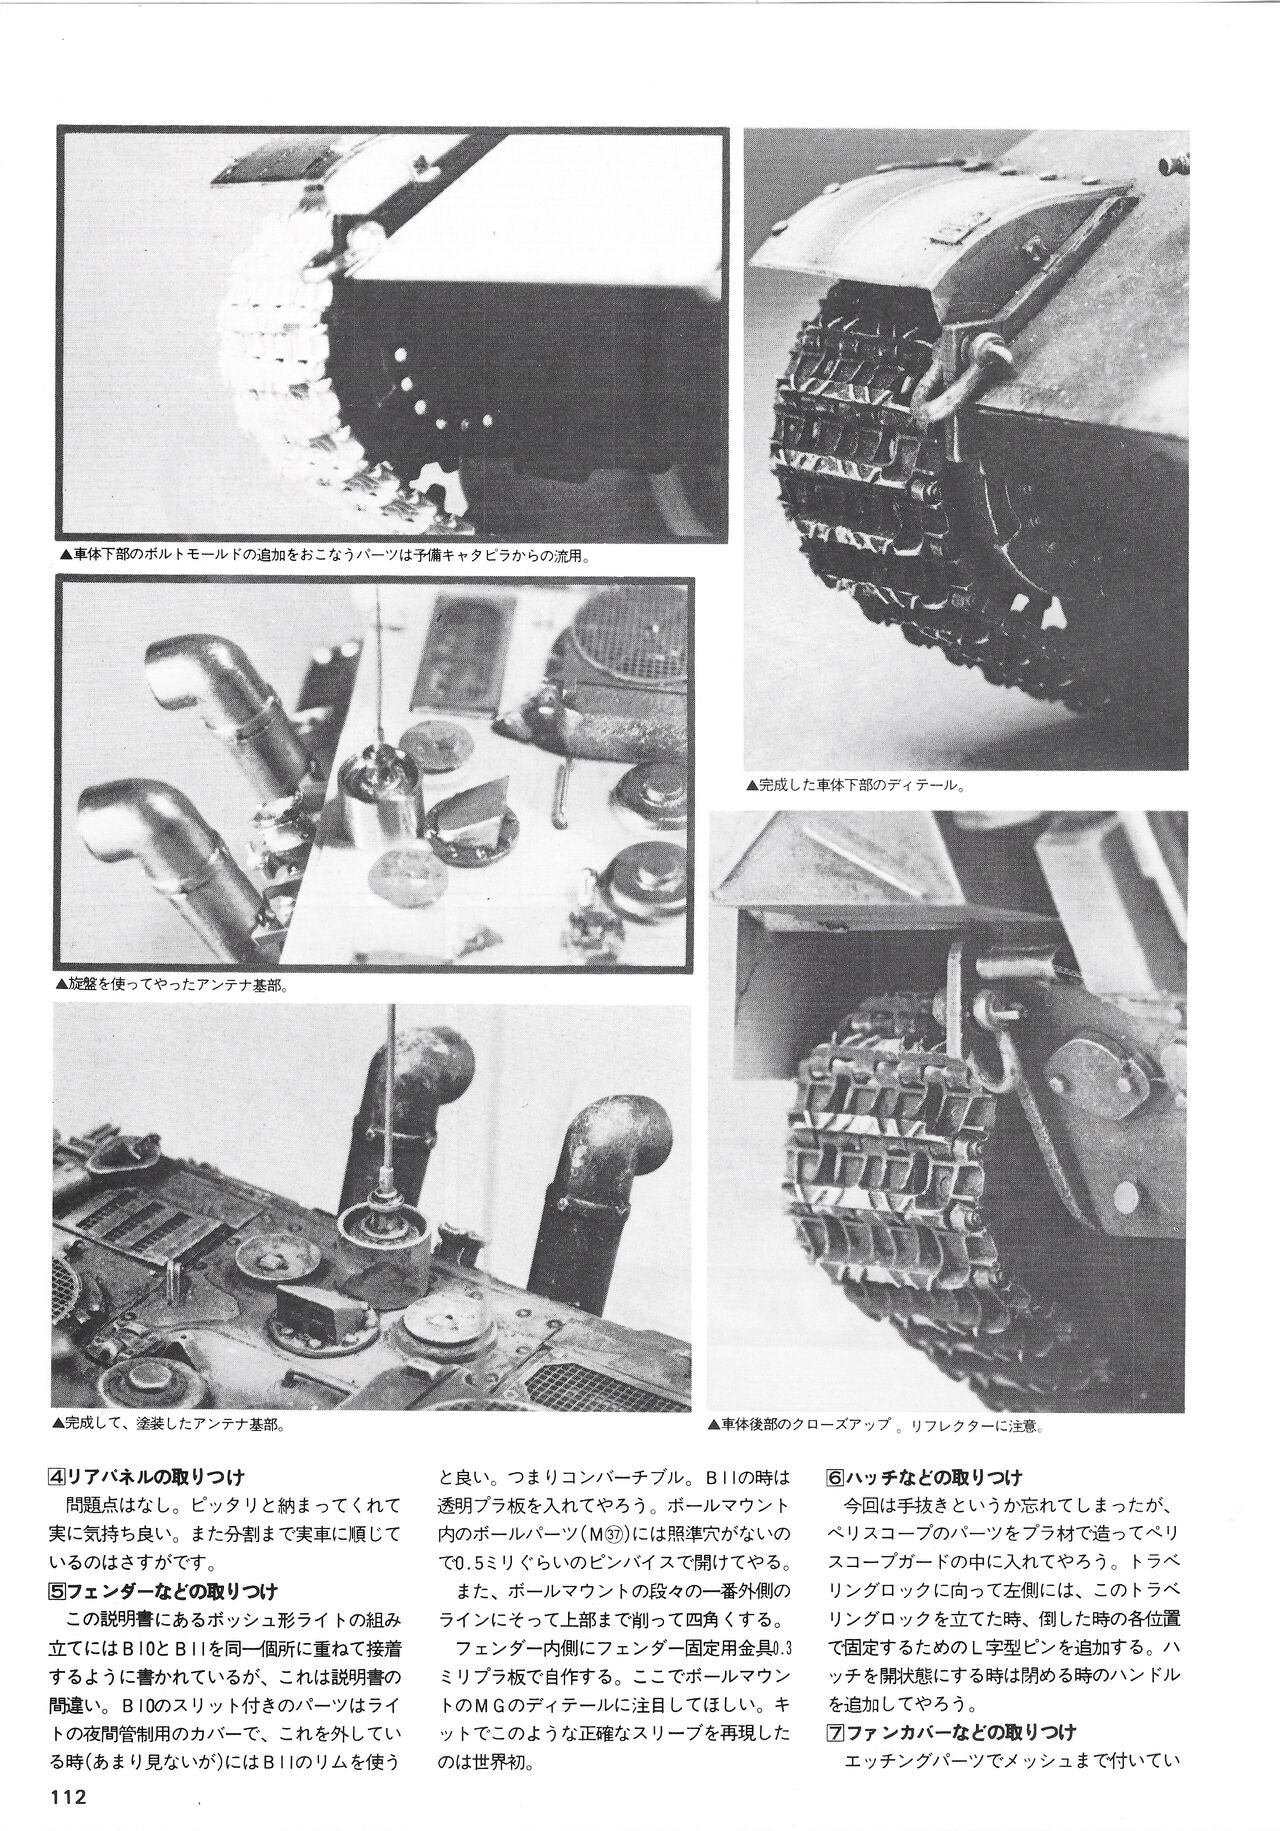 Hobby Japan Magazine 1988 Issue No.224 111